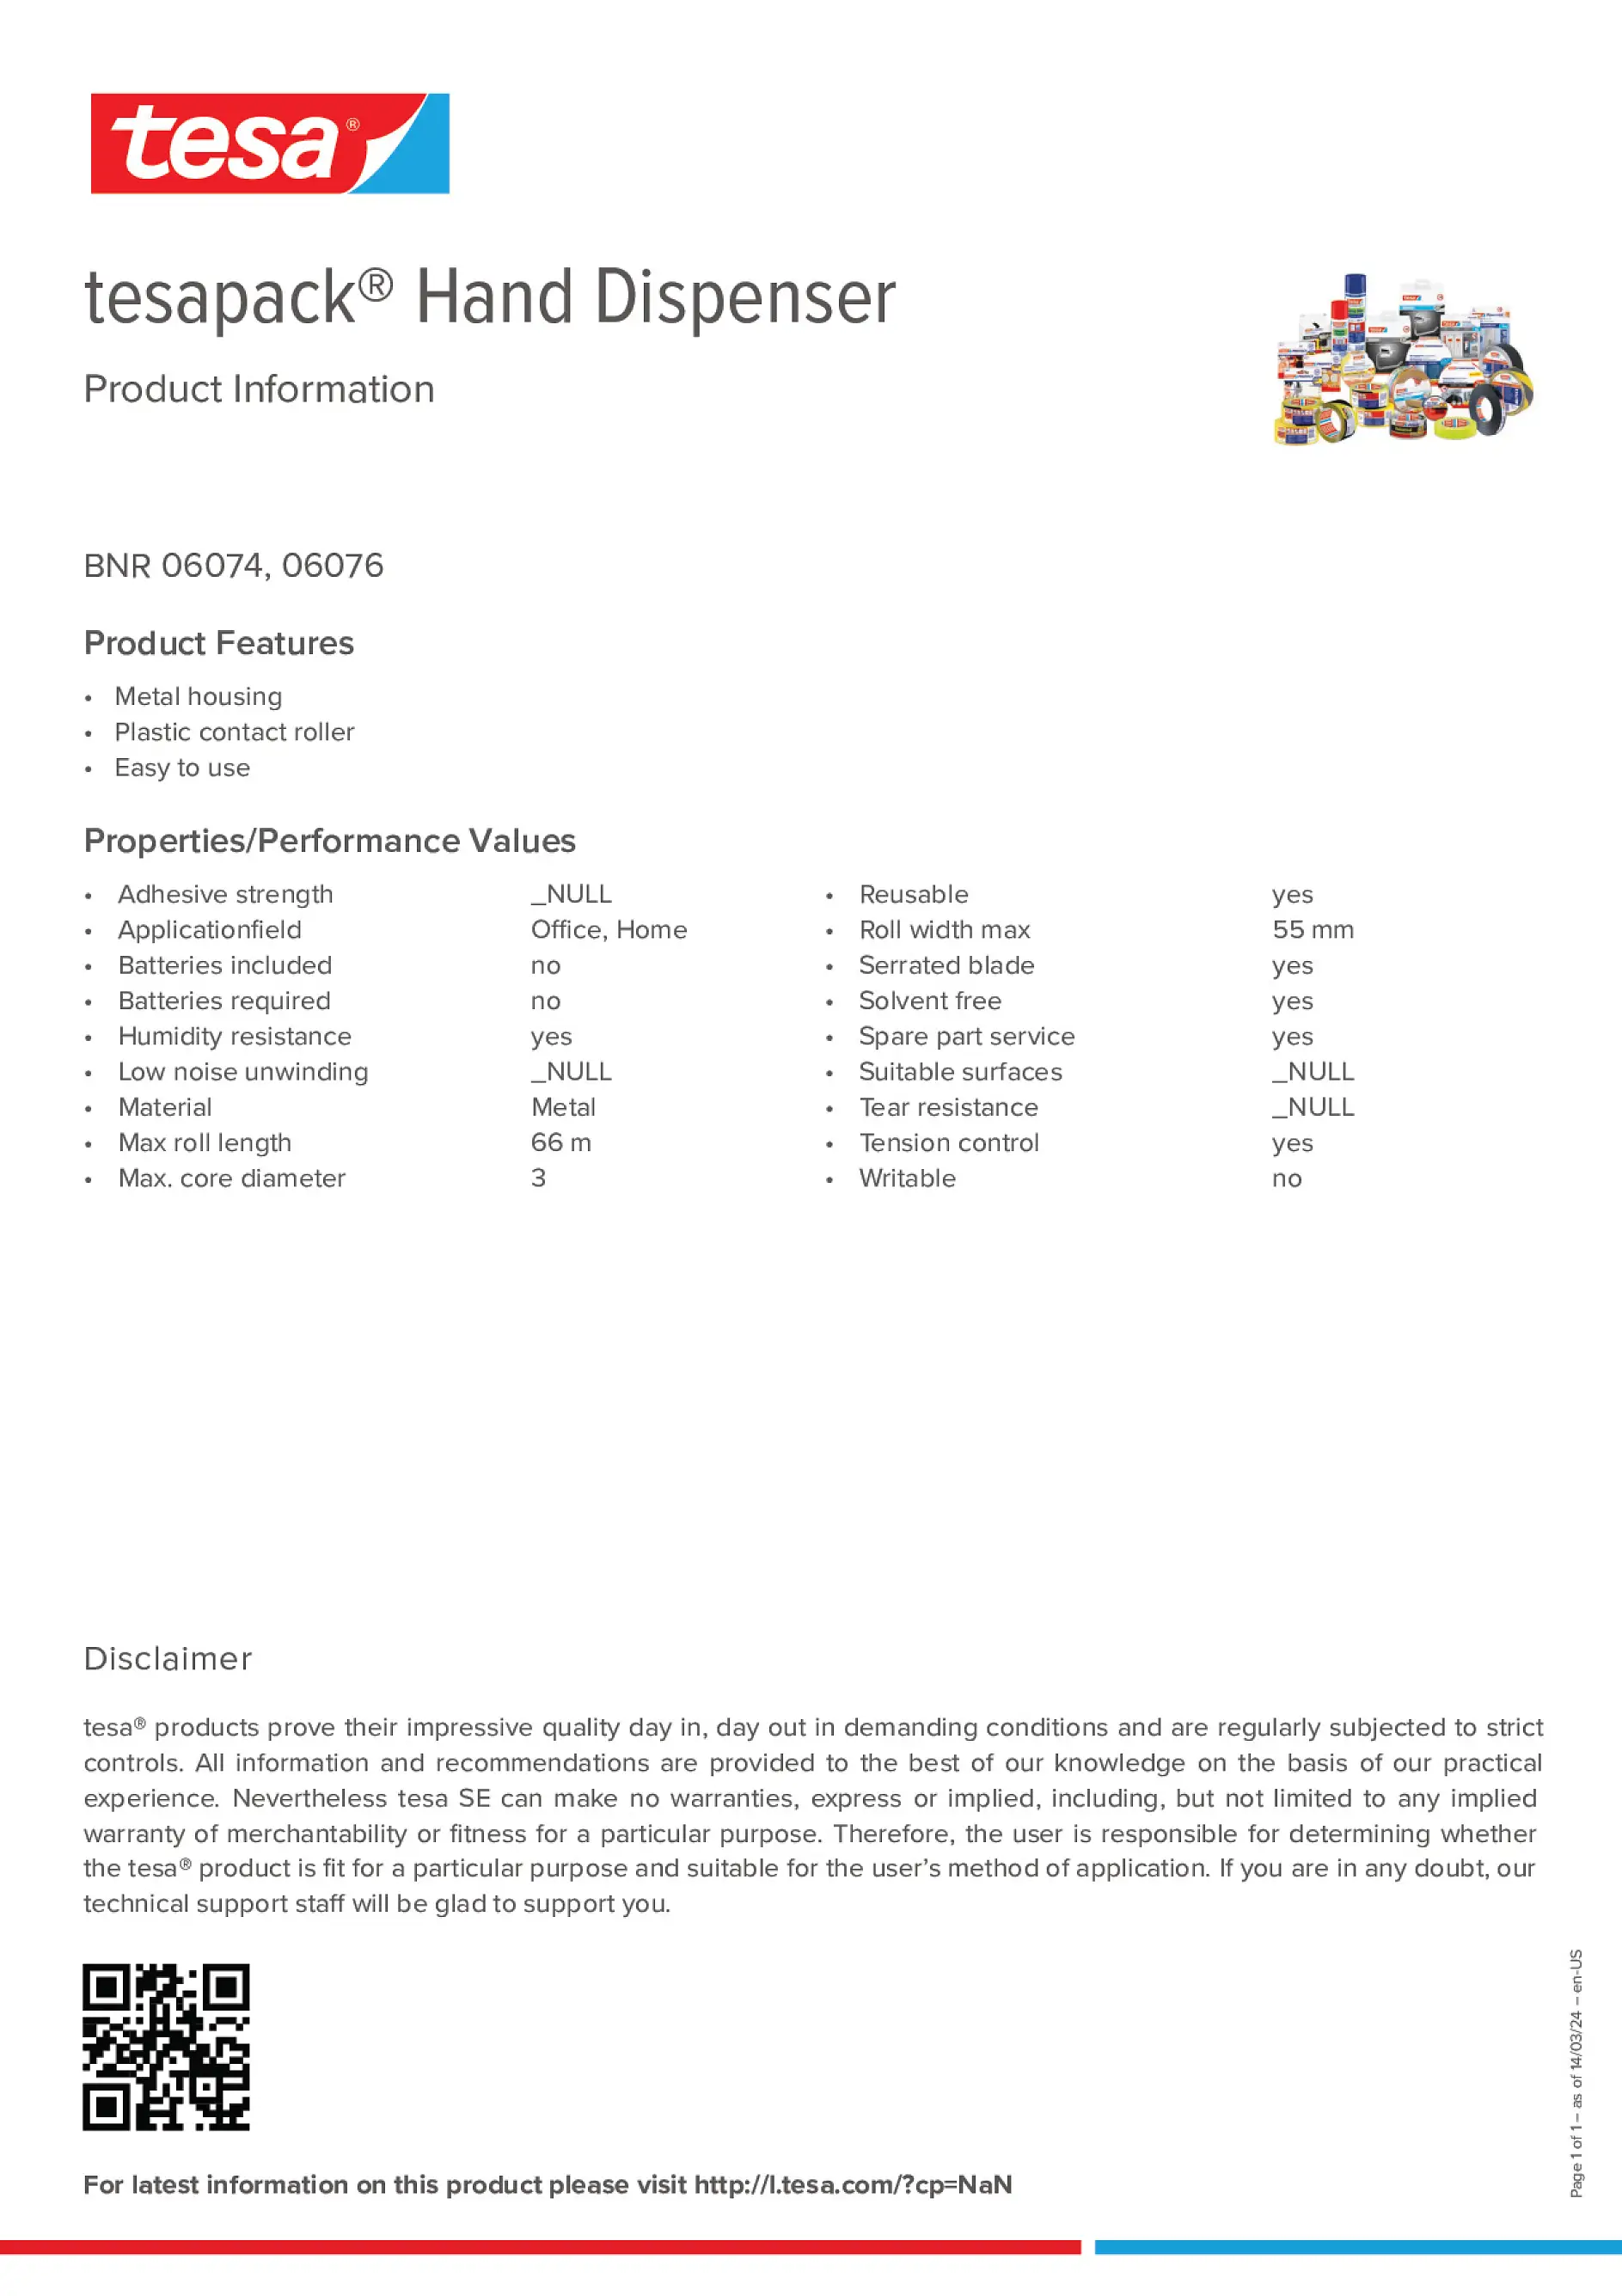 Product information_tesapack® 6076_en